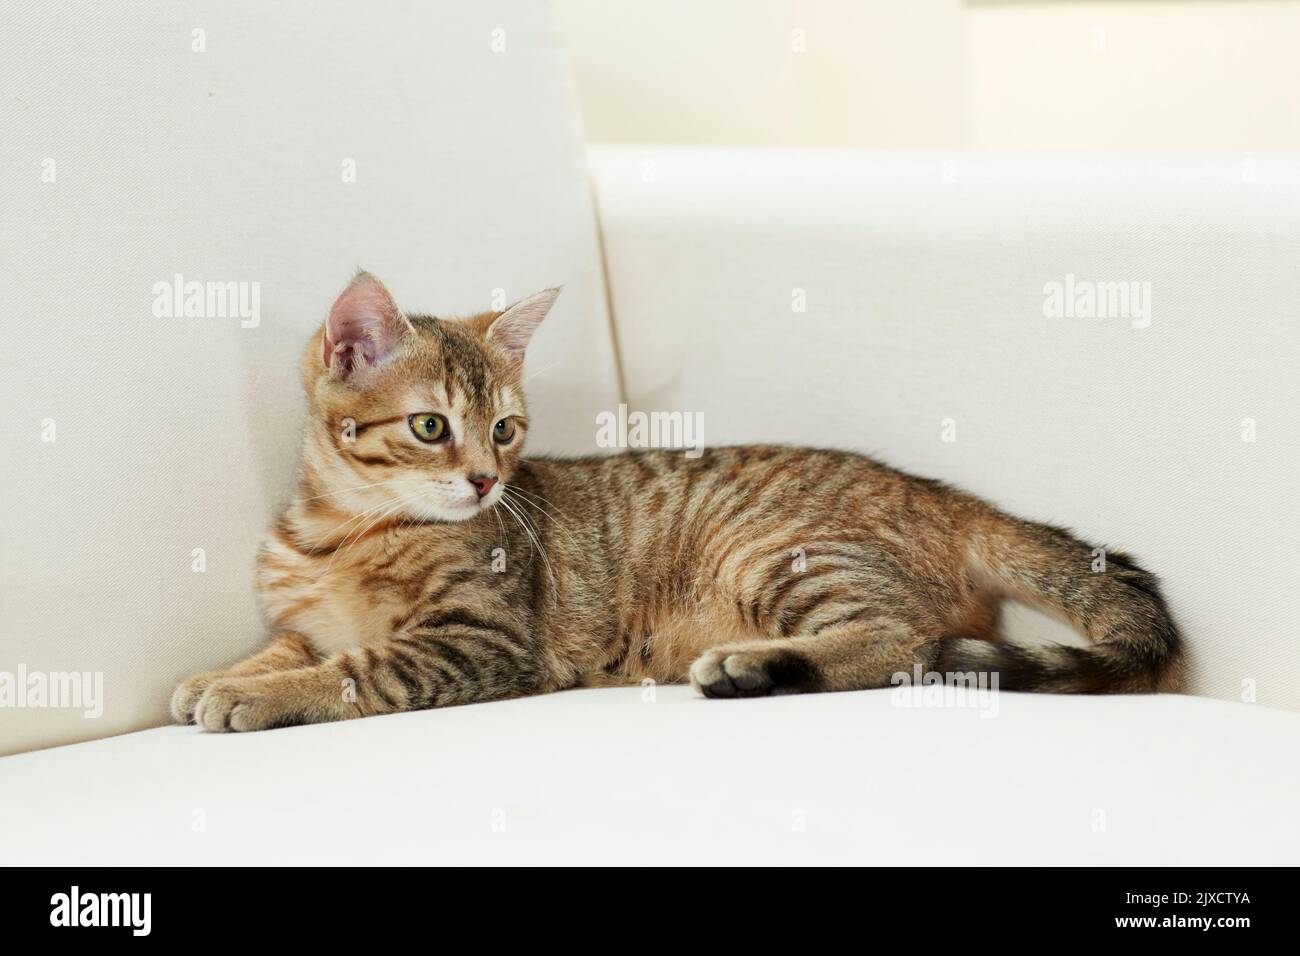 Gato doméstico. Un gato tumbado descansando en un sofá. Alemania Foto de stock